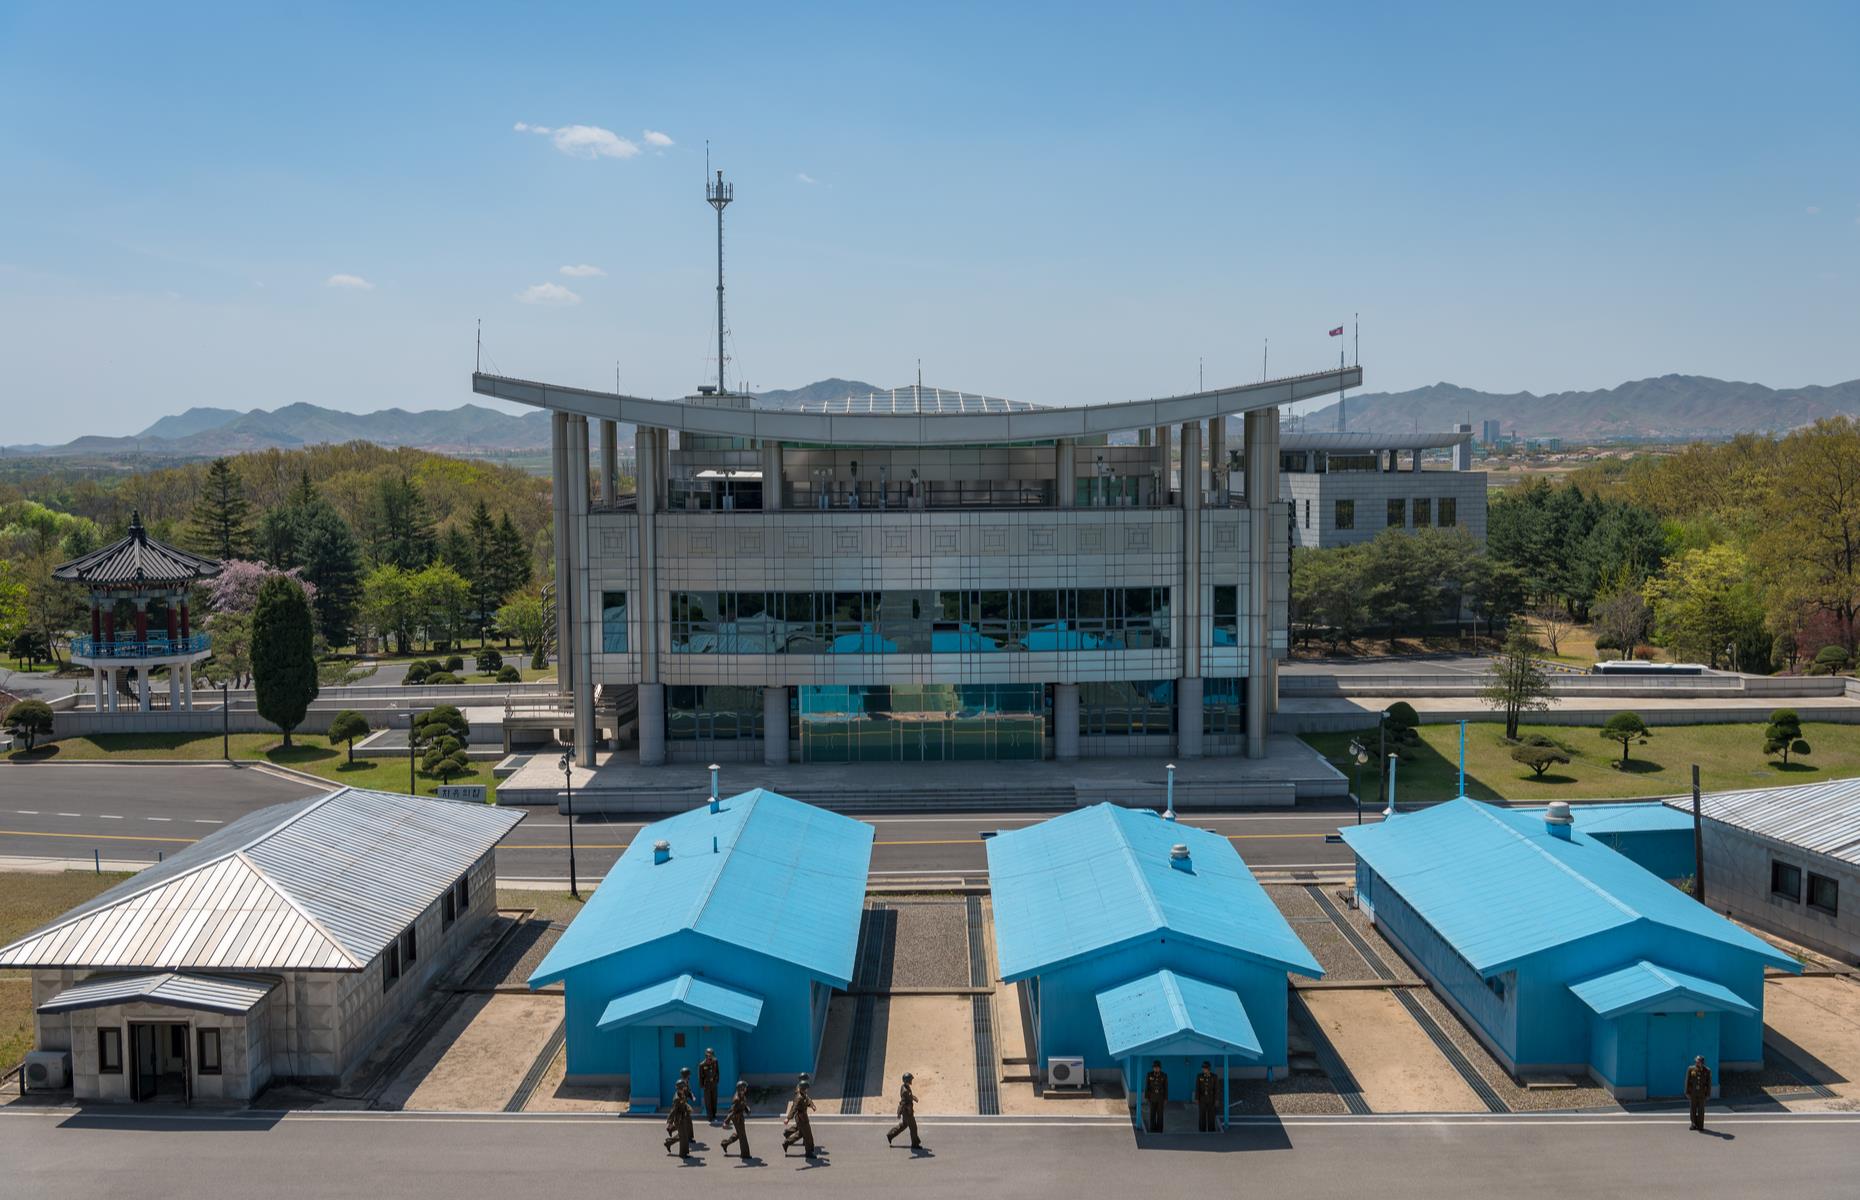 DMZ, Korea